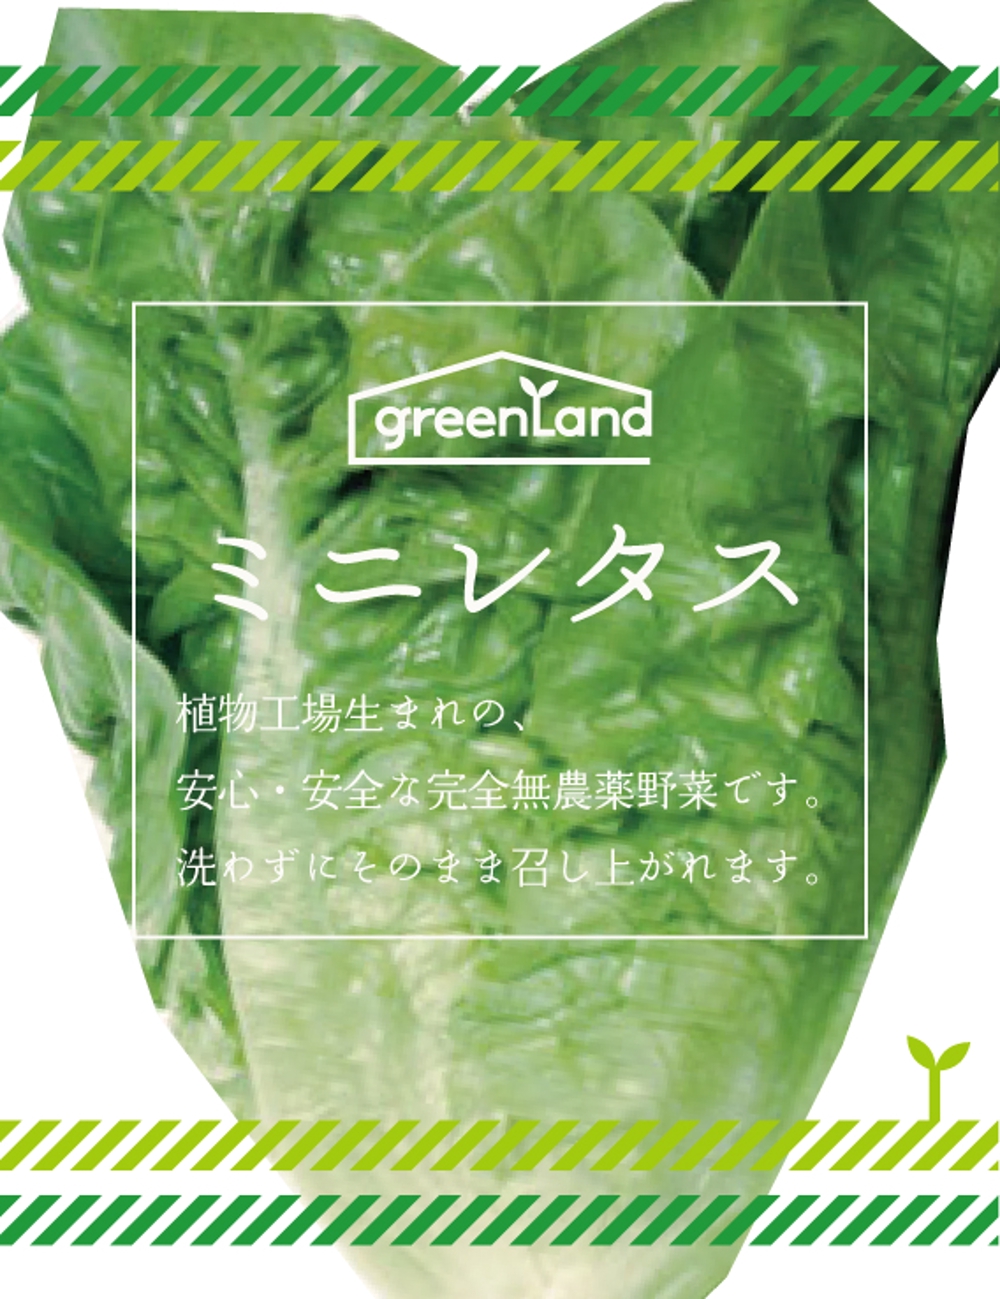 greenLand01_03.jpg